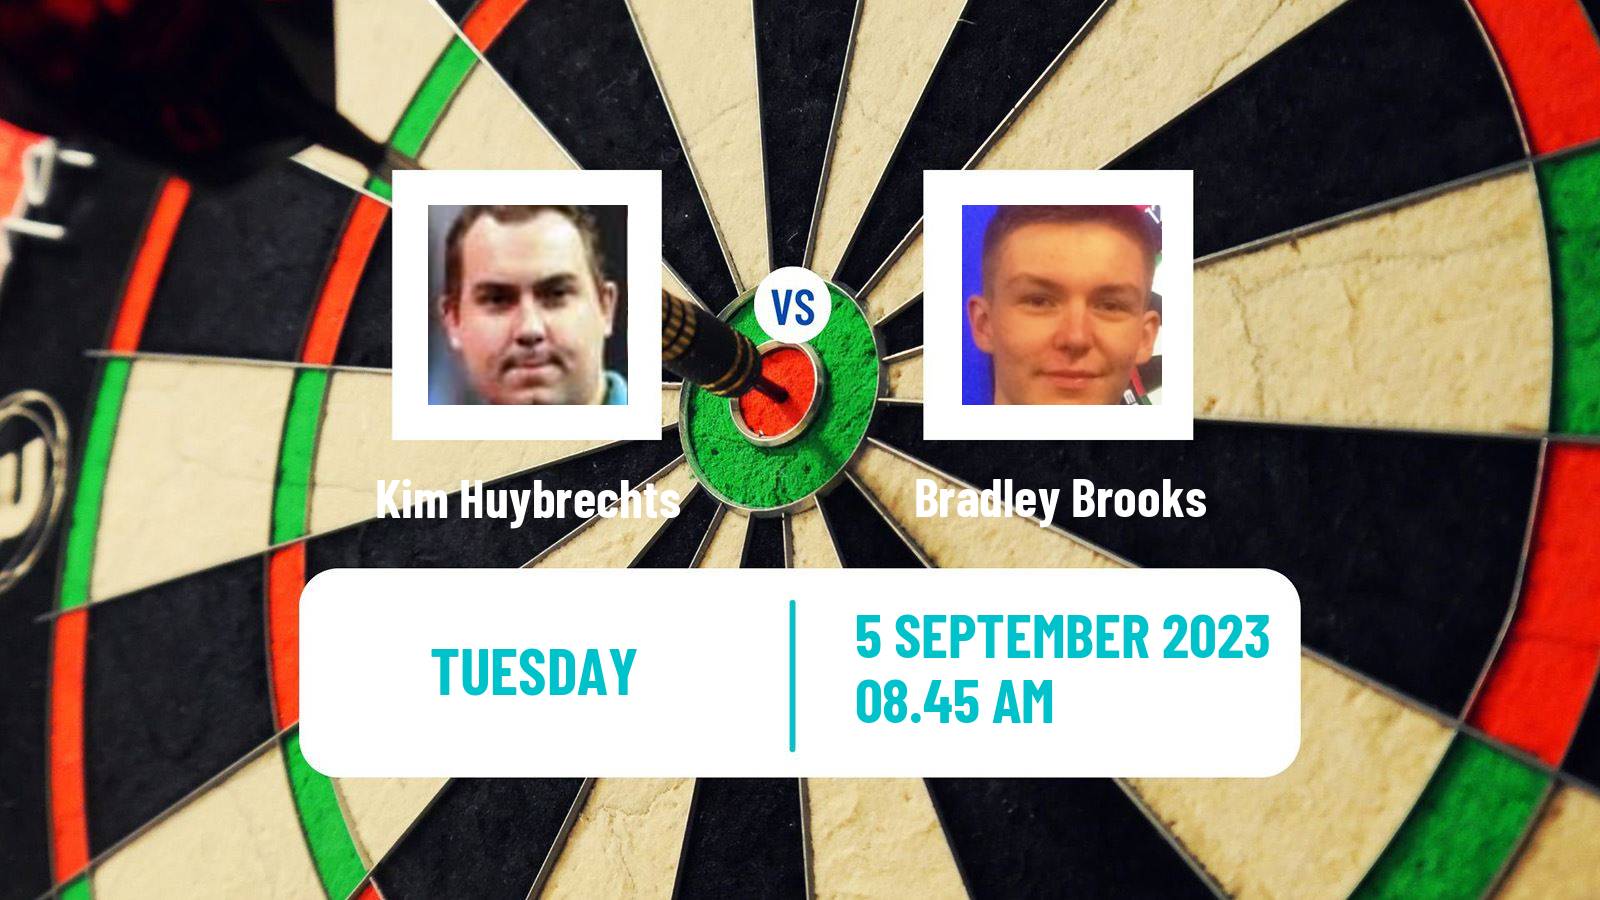 Darts Players Championship 21 2023 Kim Huybrechts - Bradley Brooks